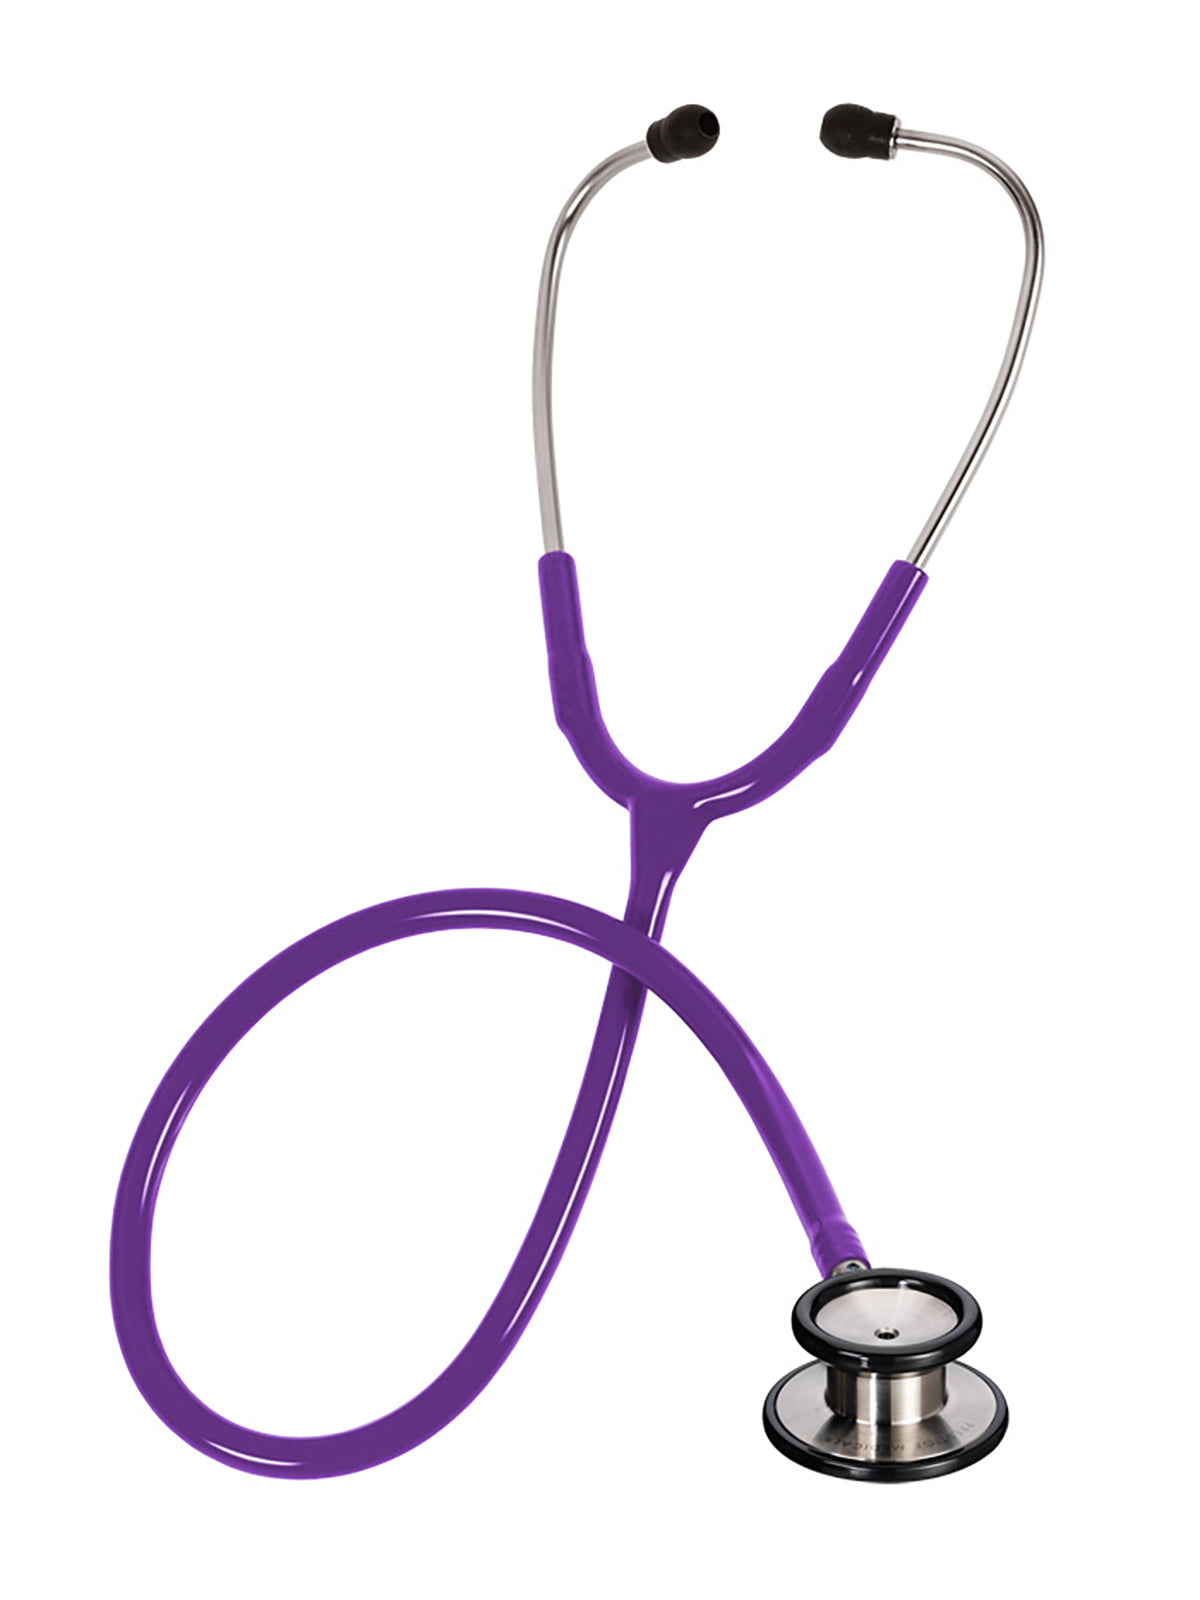 Clinical Stethoscope - 126 - Purple